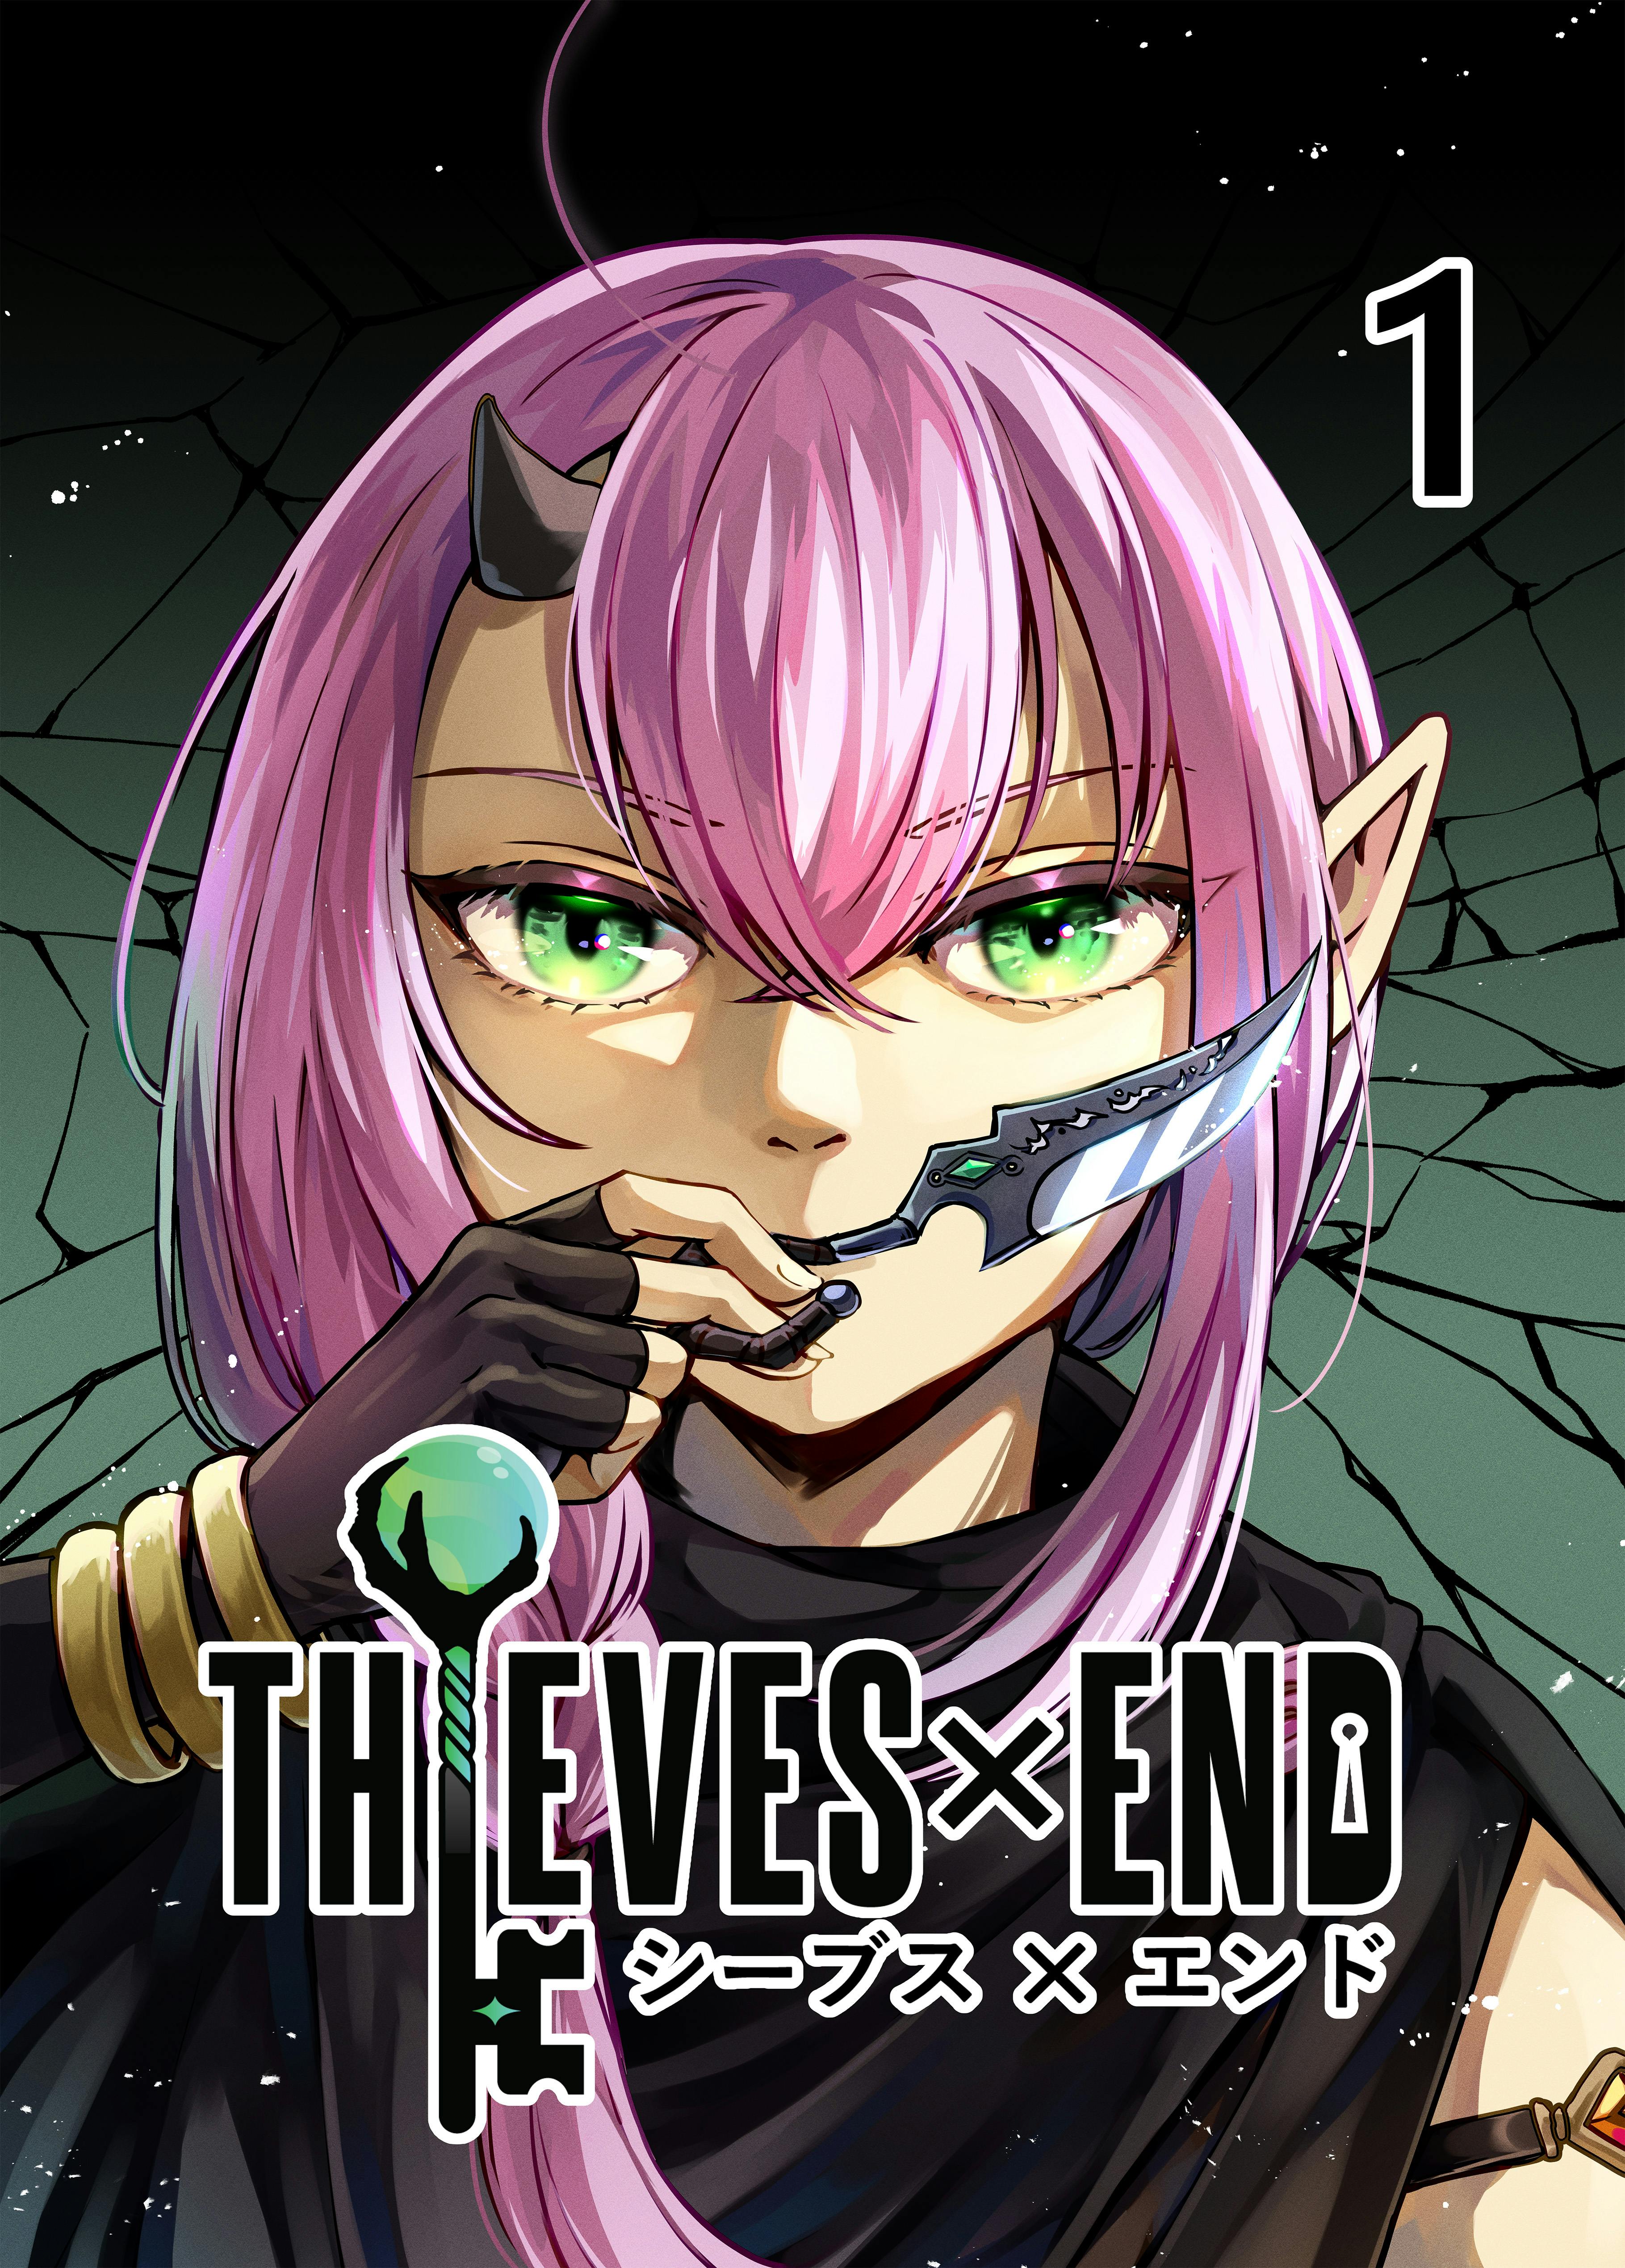 Manga Chapter 1 Cover